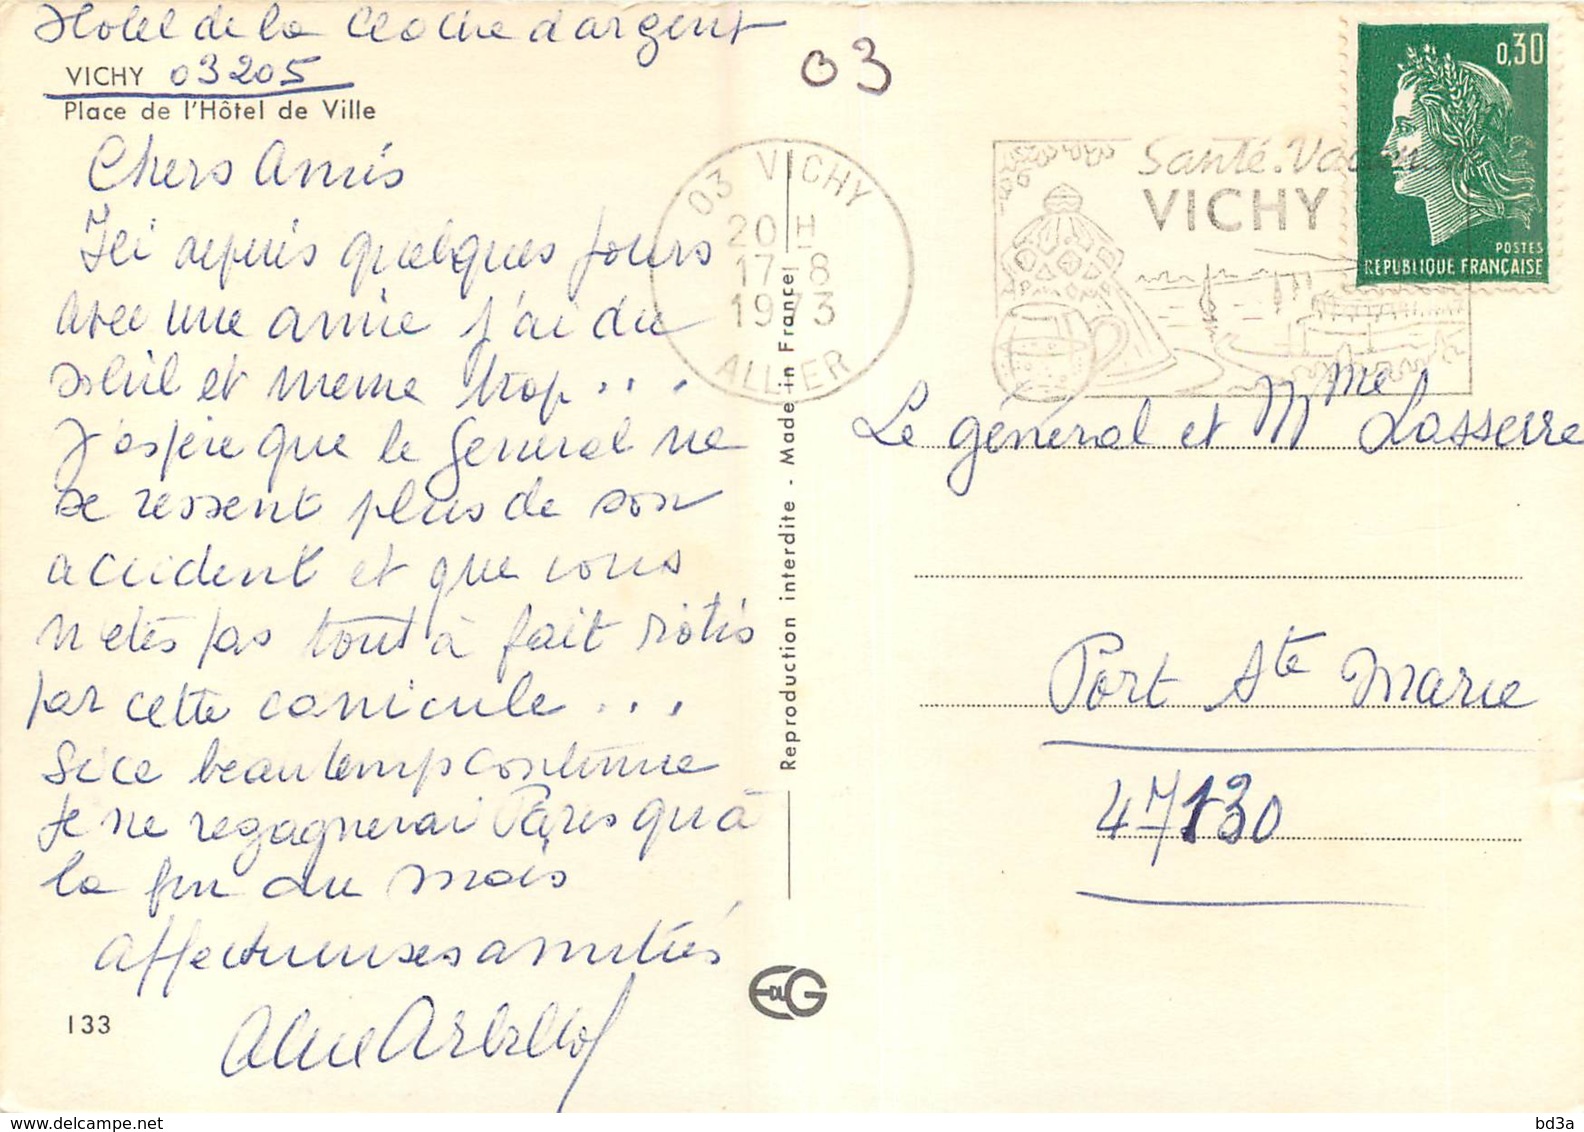 03 - VICHY - PLACE DE L'HOTEL DE VILLE - Vichy